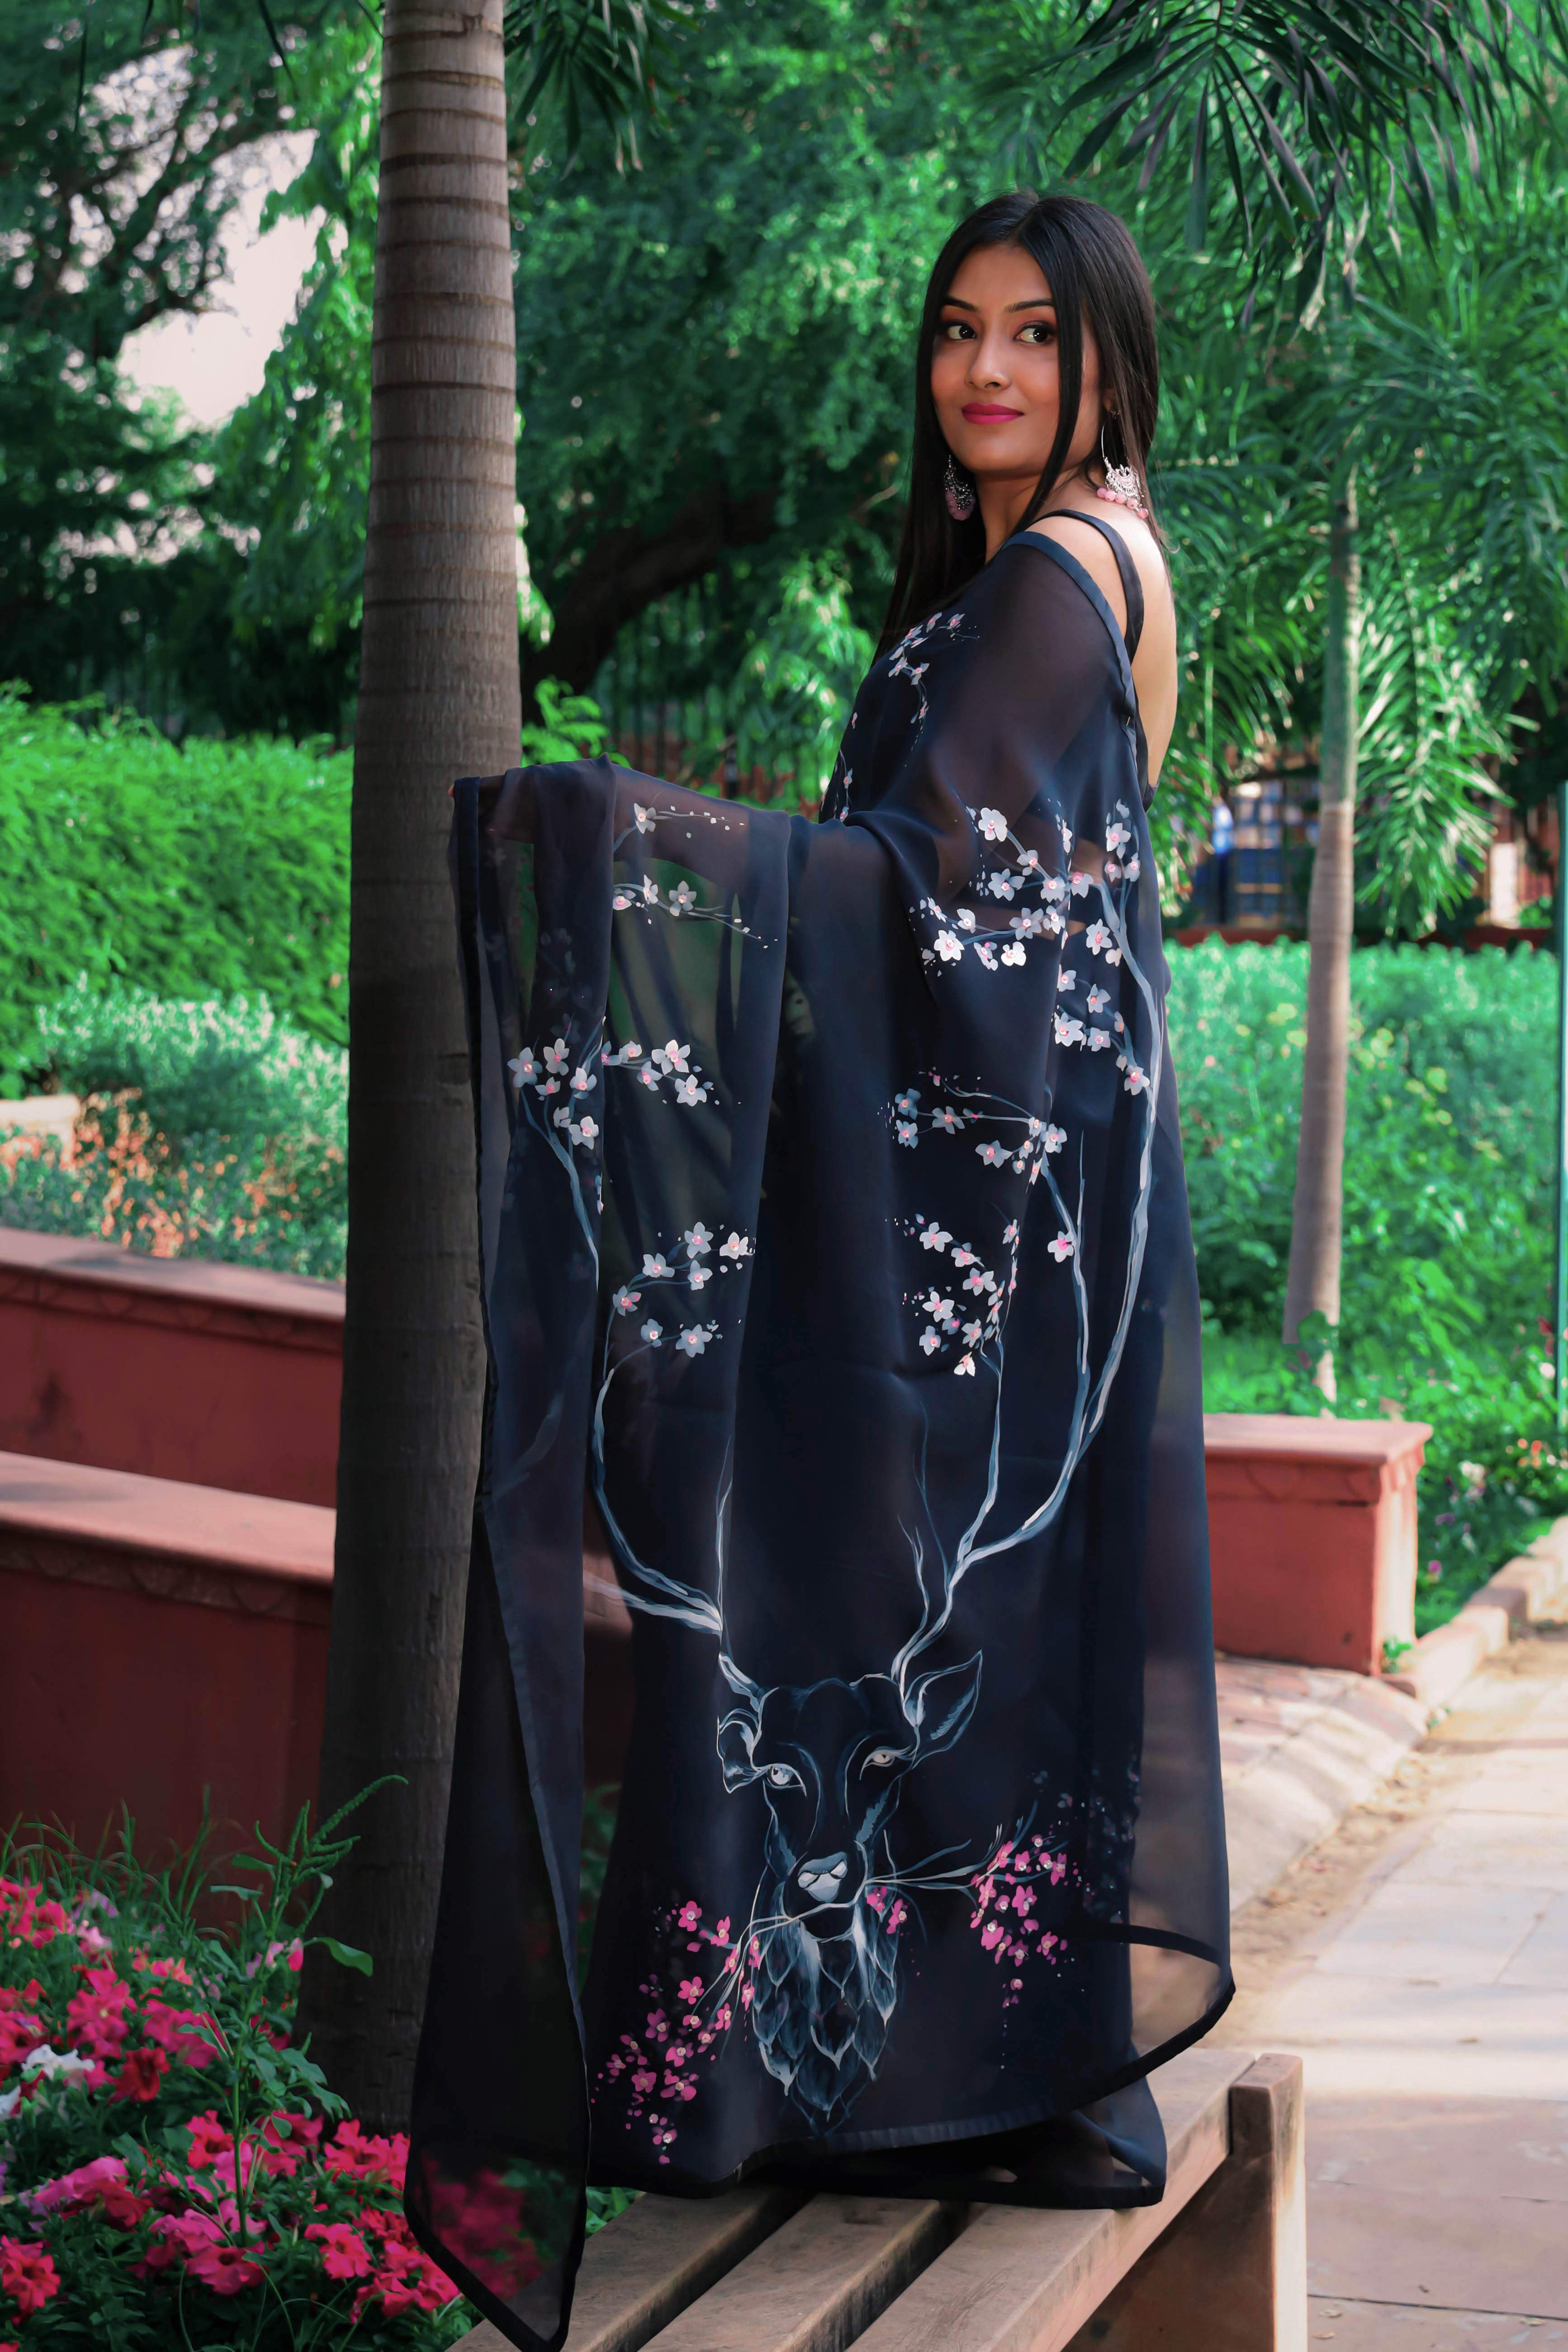 Unique And Truly Stunning Pattu Saree Blouse Designs | PINKVILLA